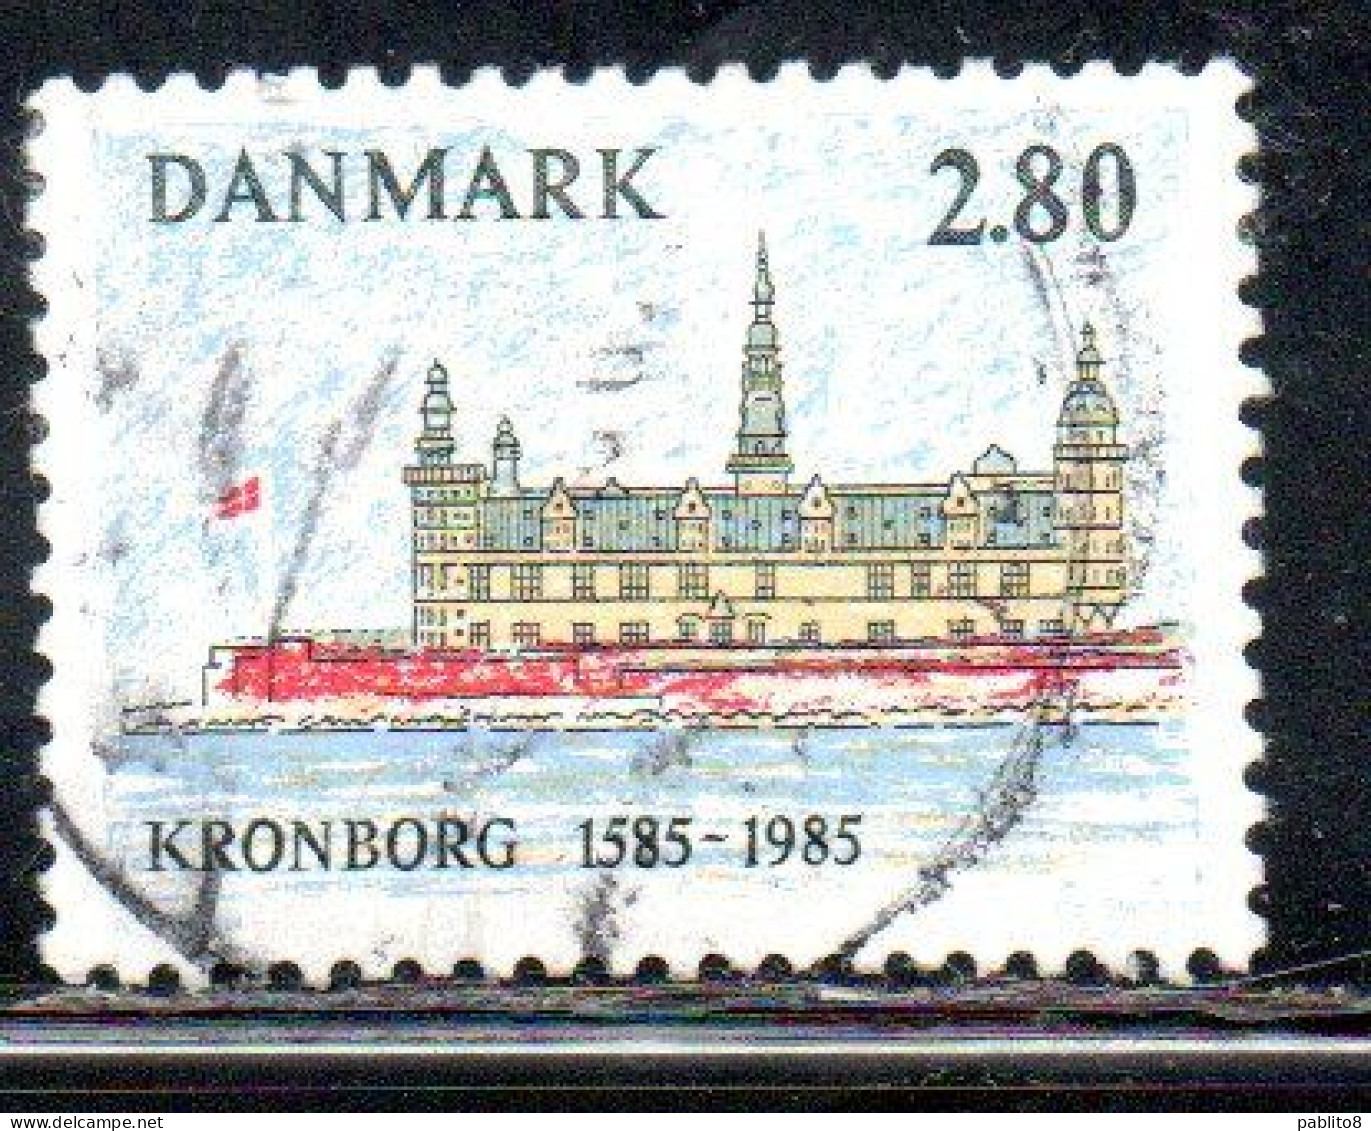 DANEMARK DANMARK DENMARK DANIMARCA 1985 KRONBORG CASTLE ELSINORE 400th ANNIVERSARY 2.80k USED USATO OBLITERE' - Usati